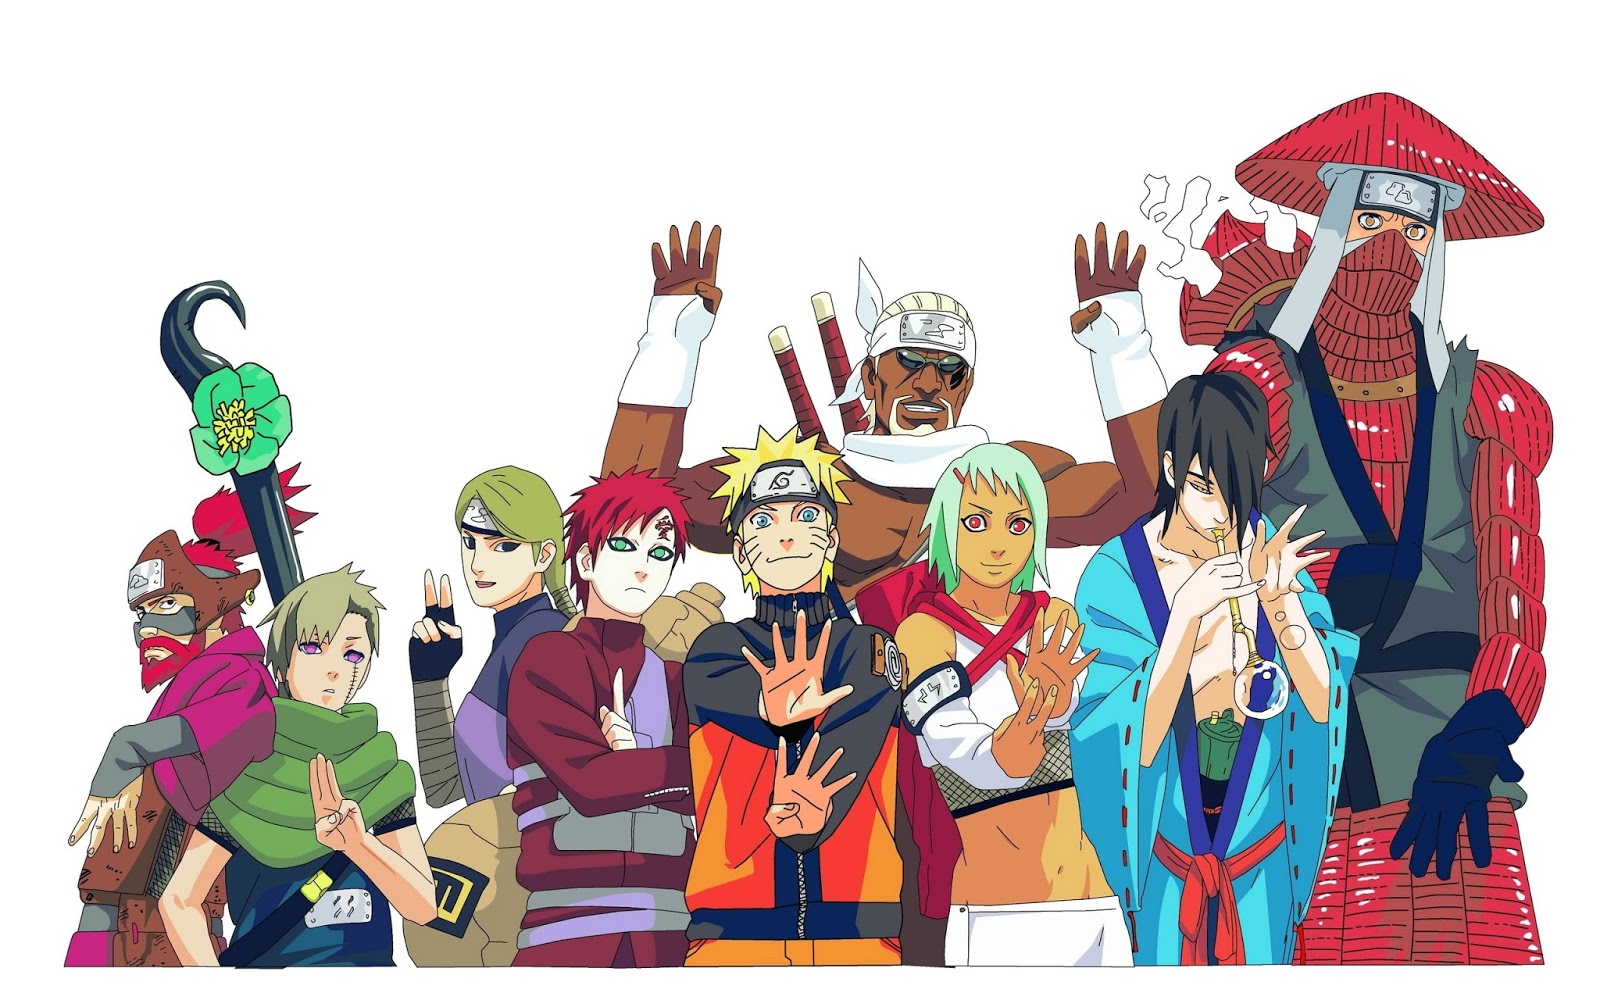 Kumpulan Wallpaper Naruto Hd Lengkap Terbaru Saku Share